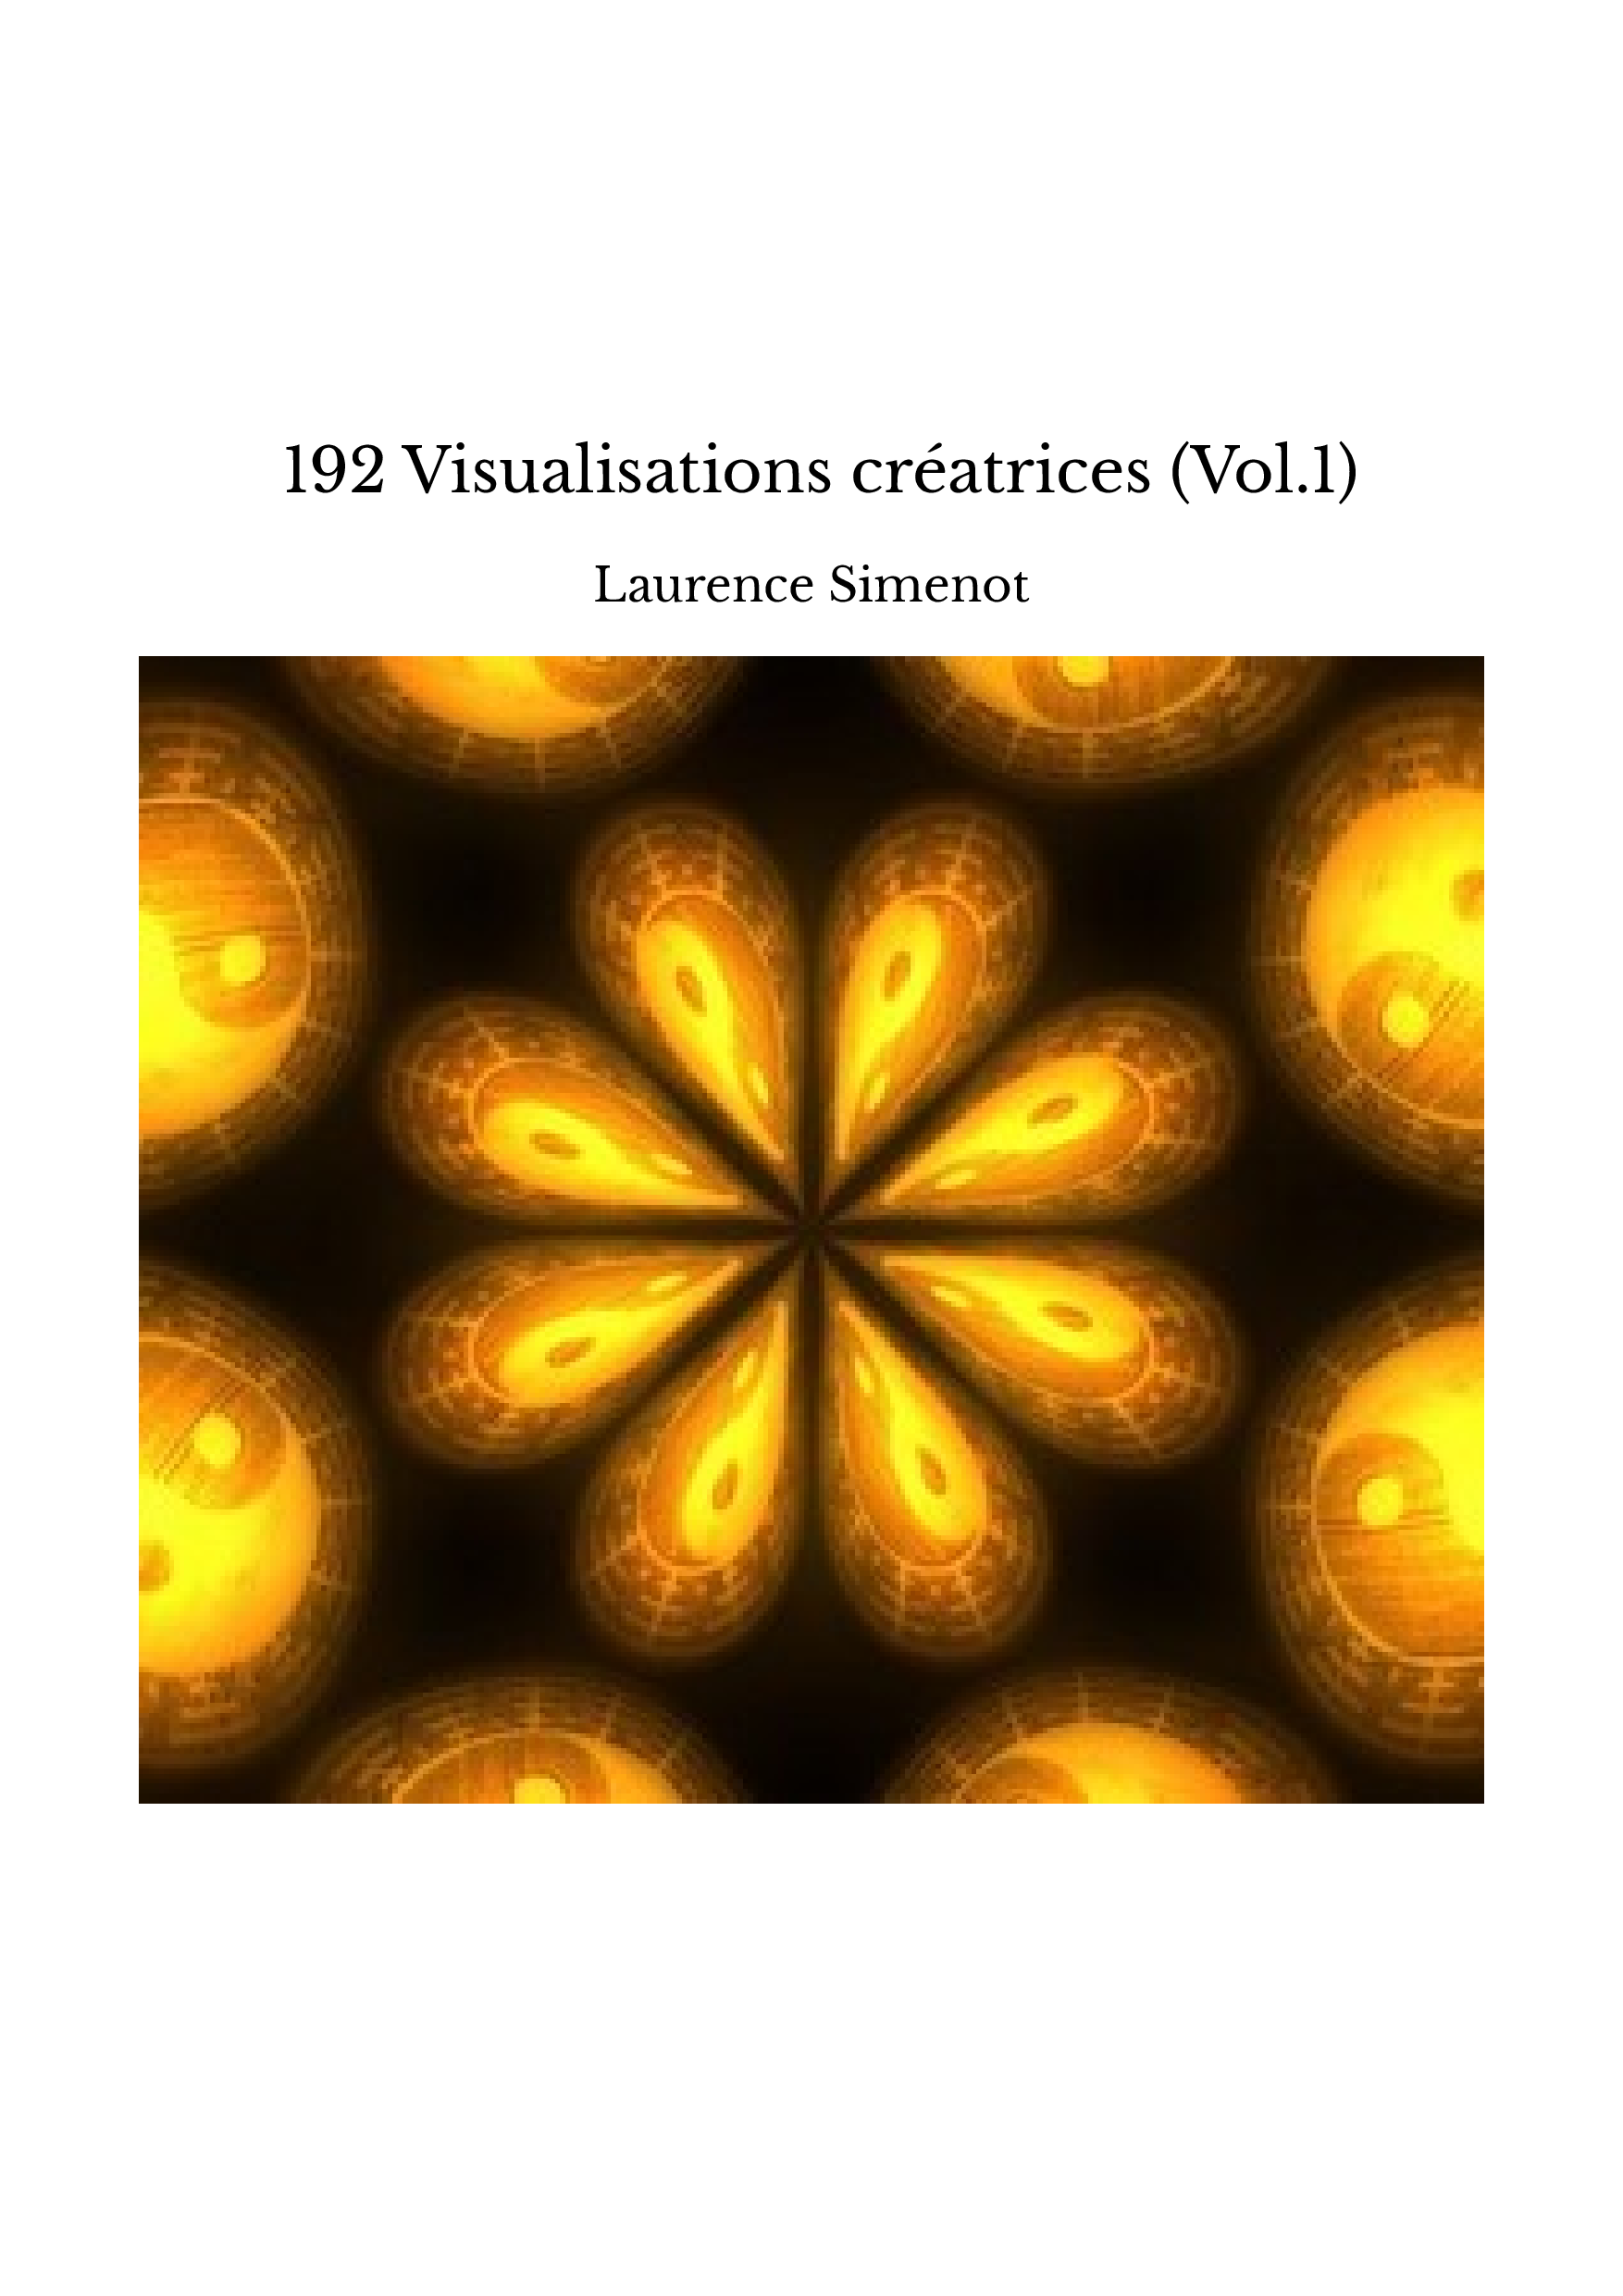  192 Visualisations créatrices (Vol.1)